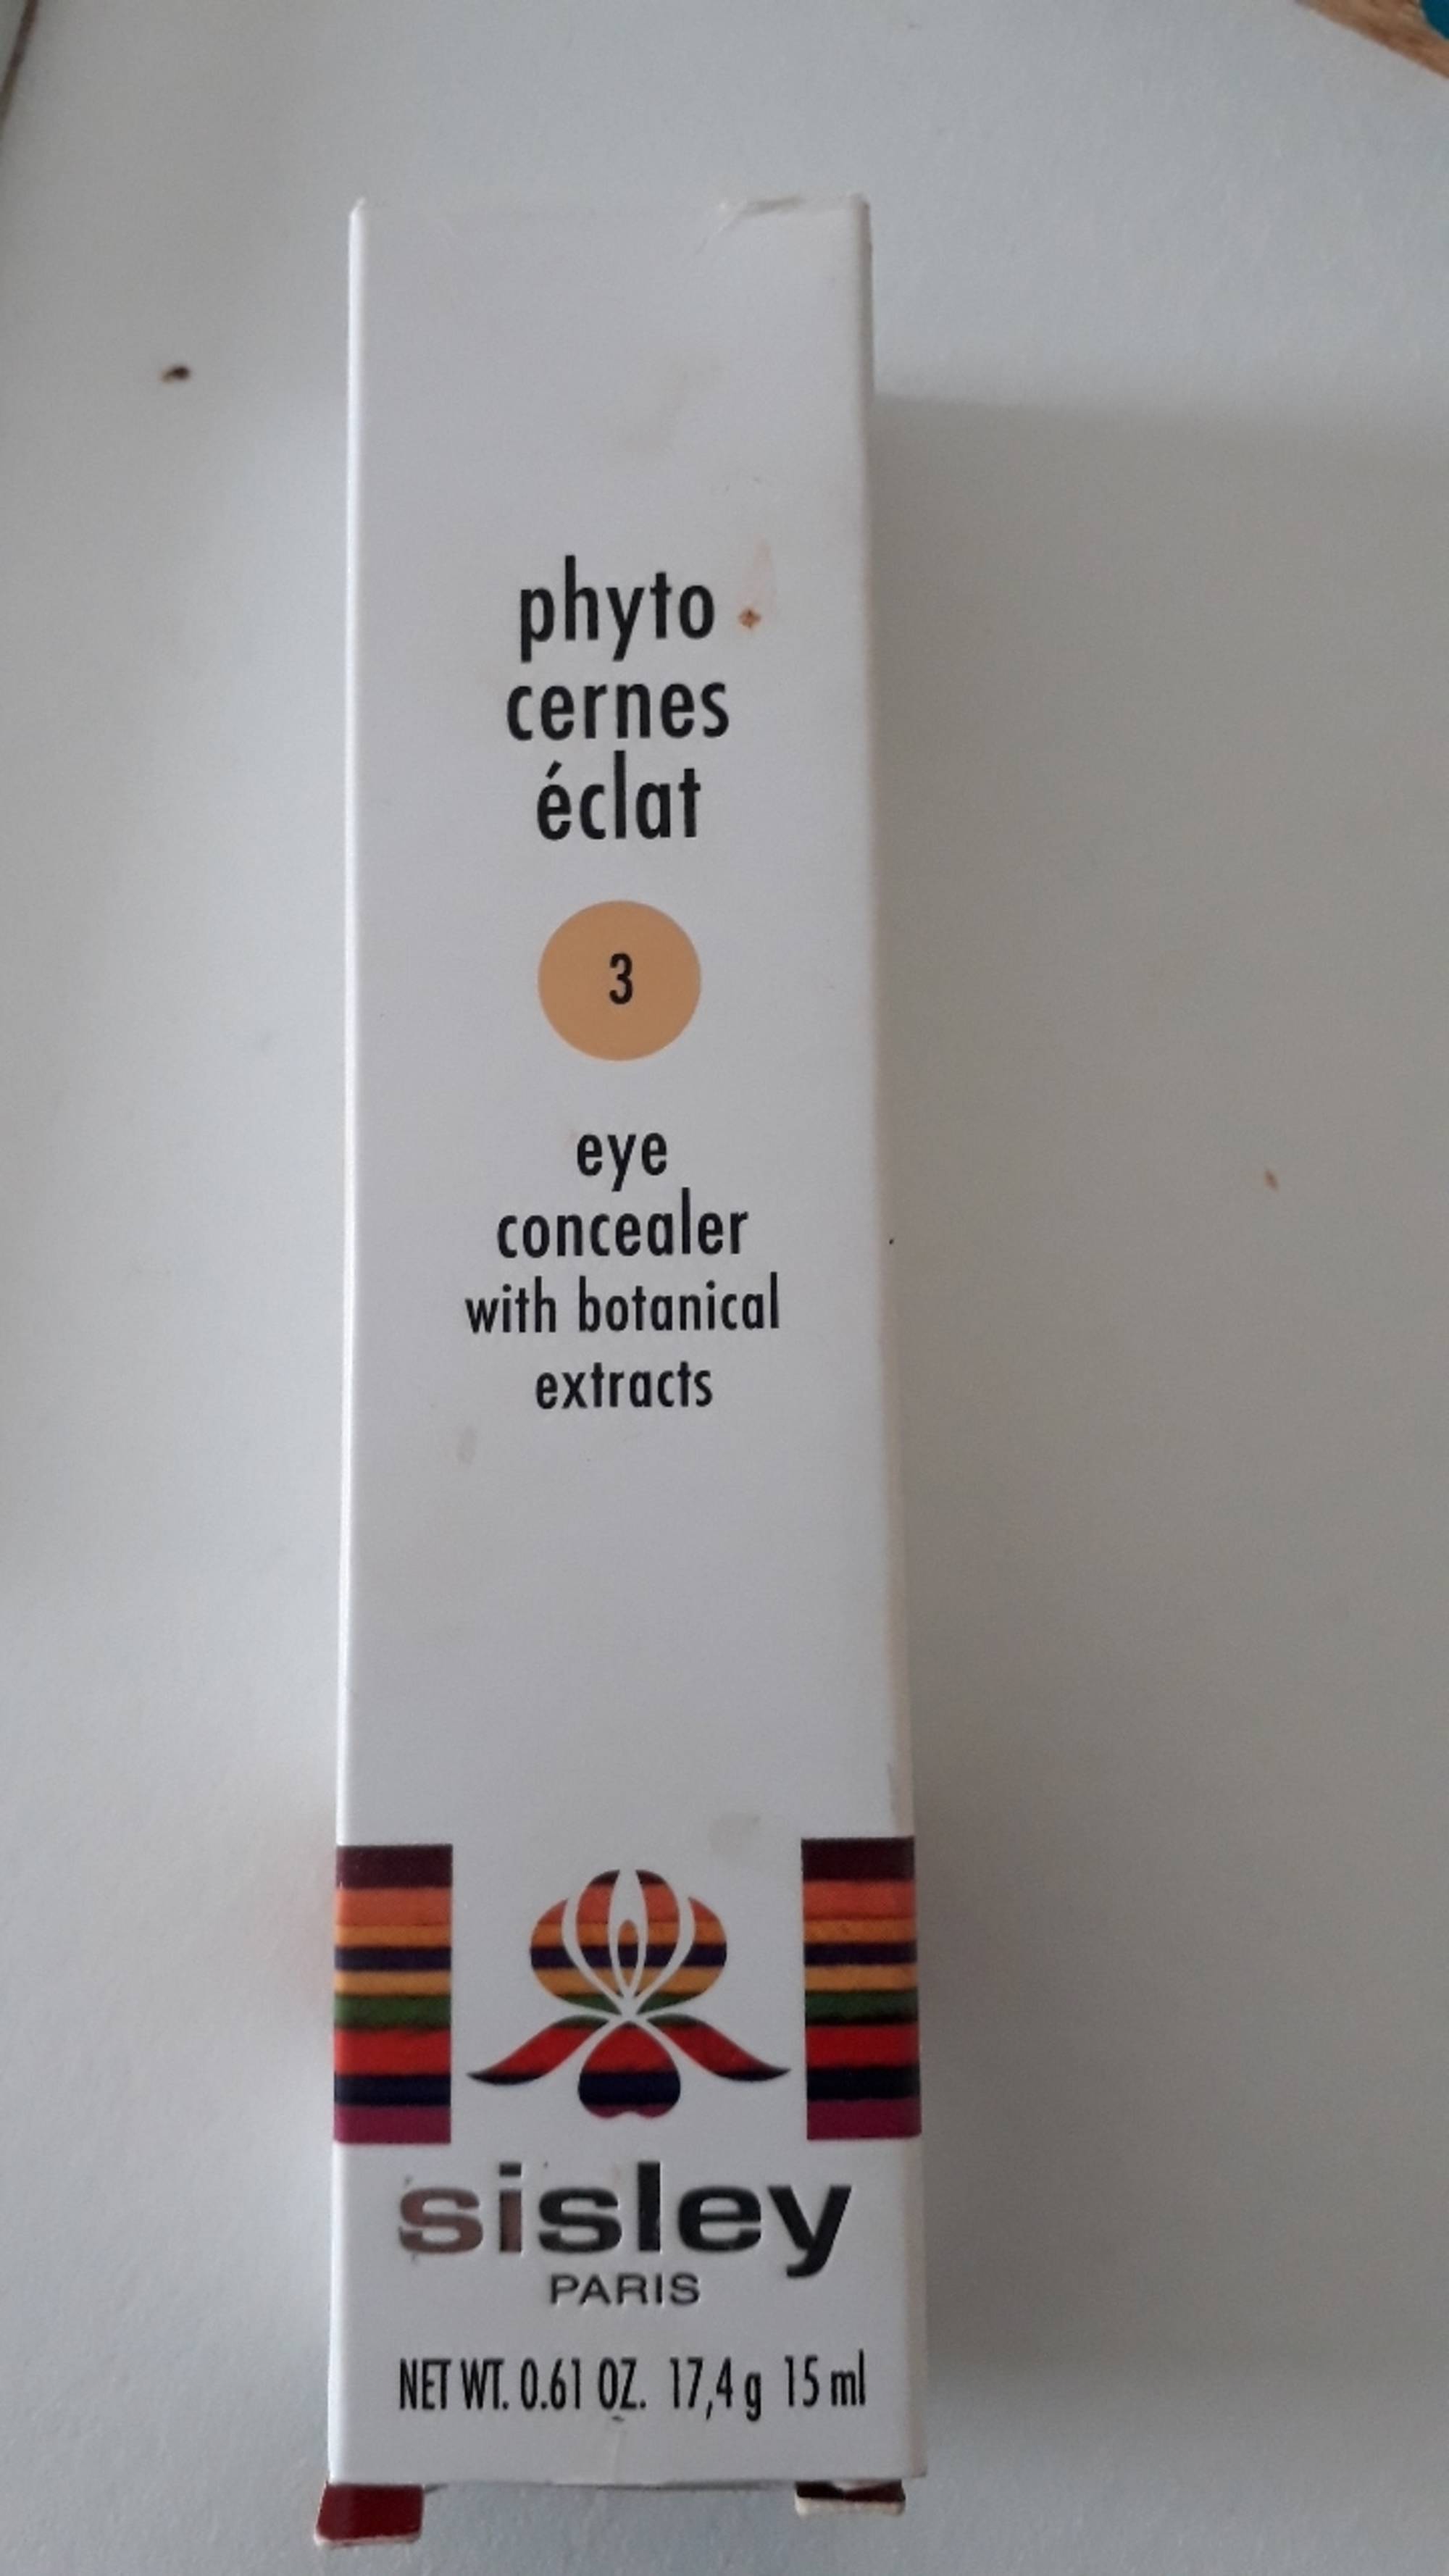 SISLEY - Phyto cernes éclat 3